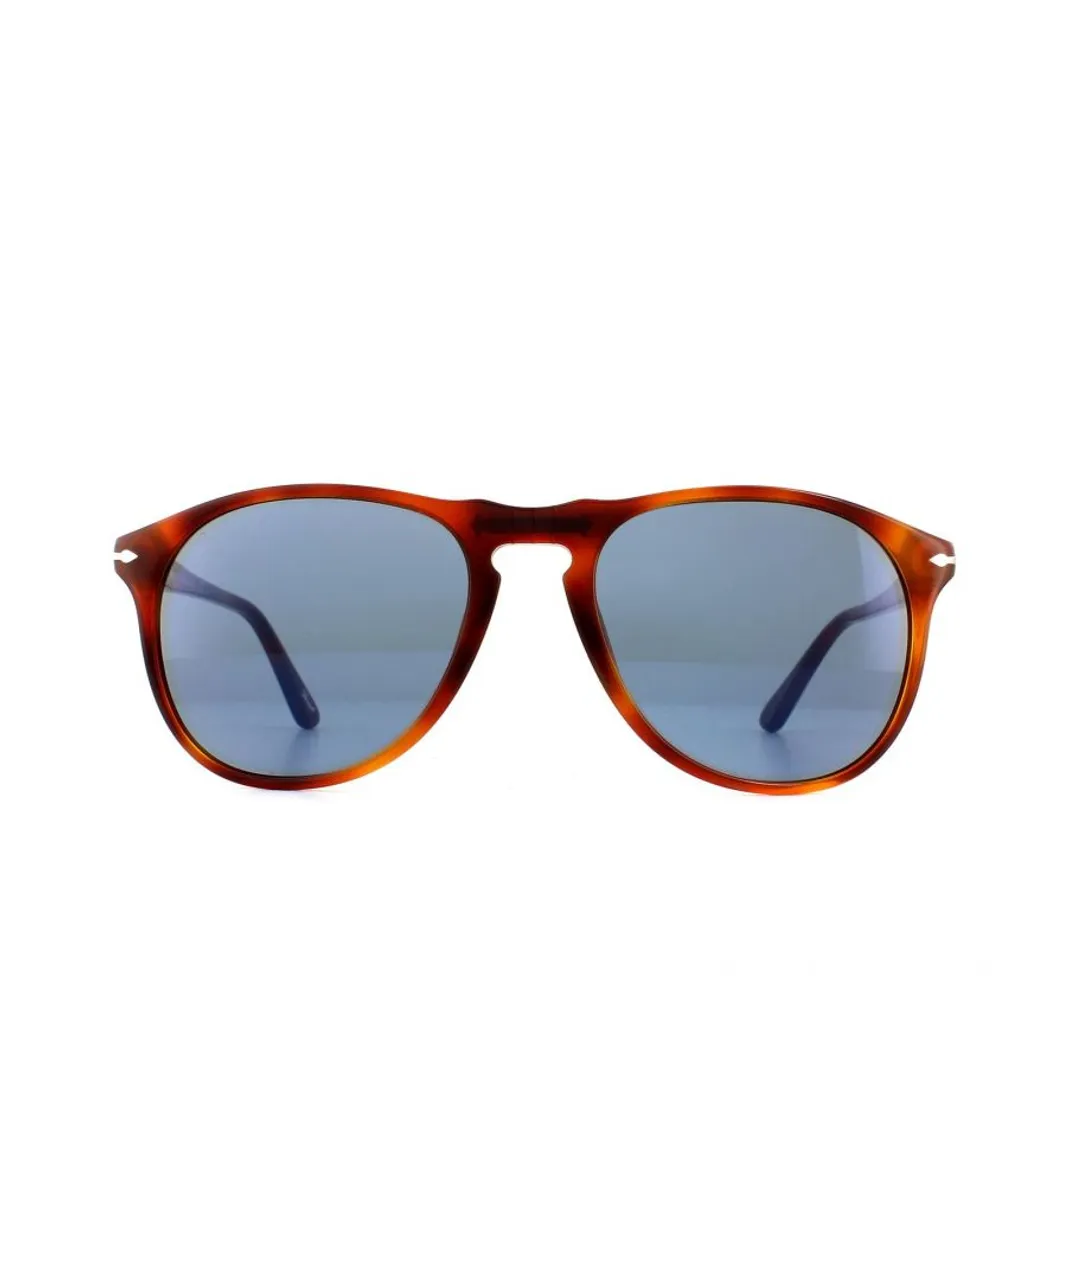 Persol Mens Sunglasses 9649 96/56 Terra Di Siena Light Blue - Brown - One